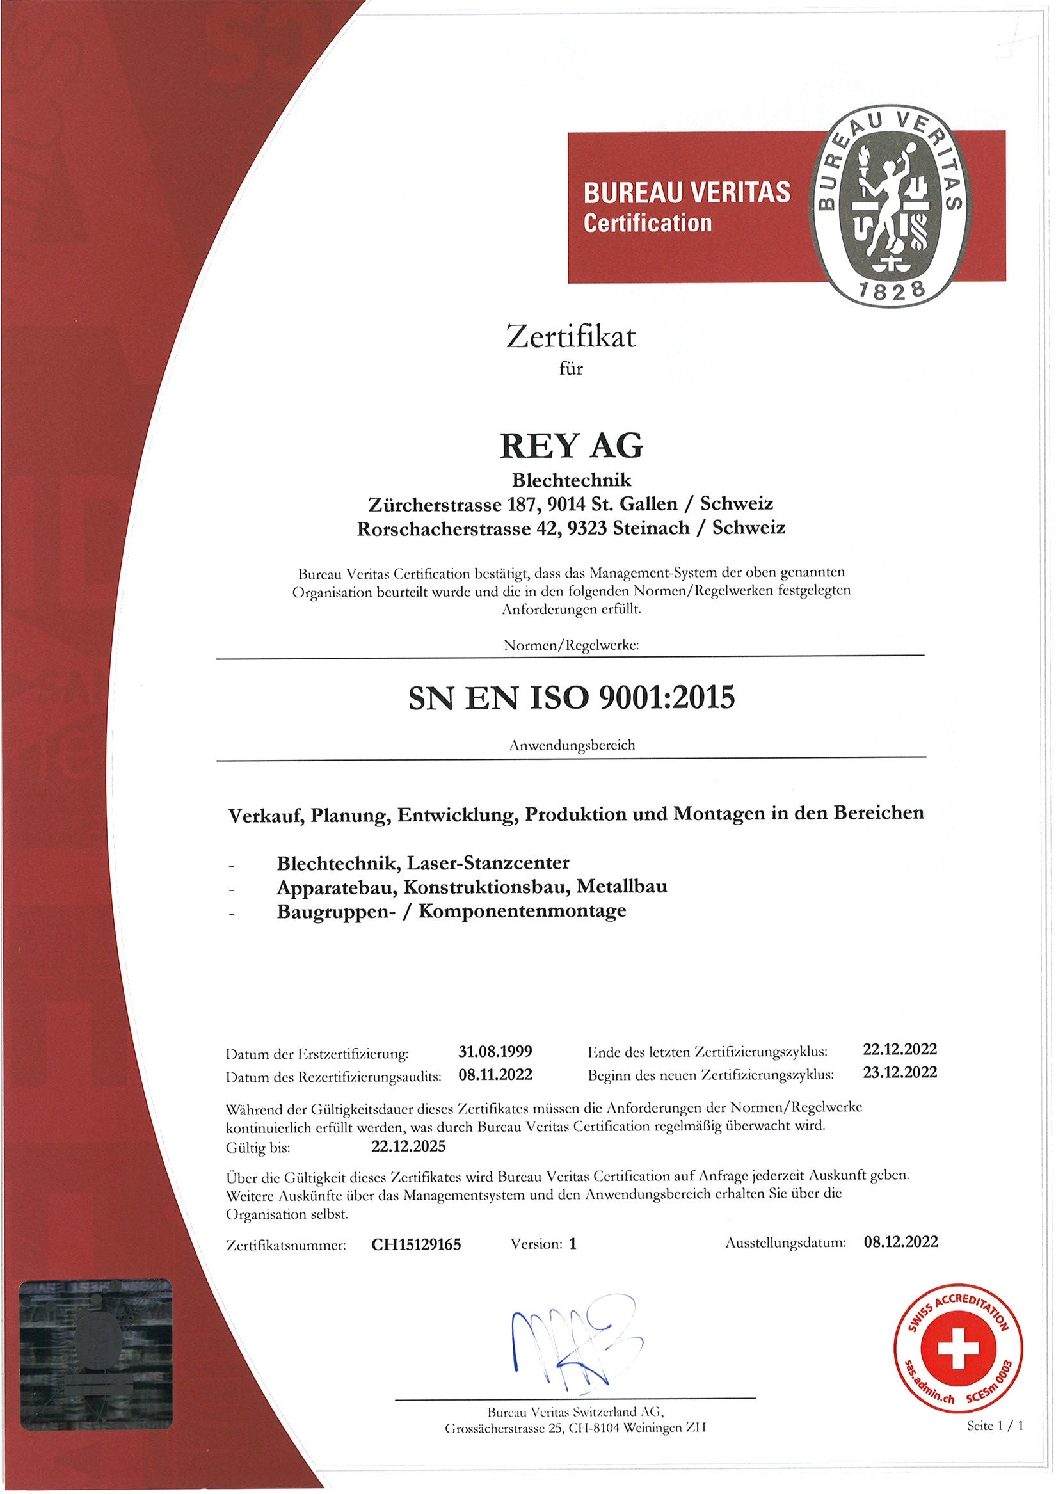 Rey AG Blechtechnik - Qualitätsmanagement